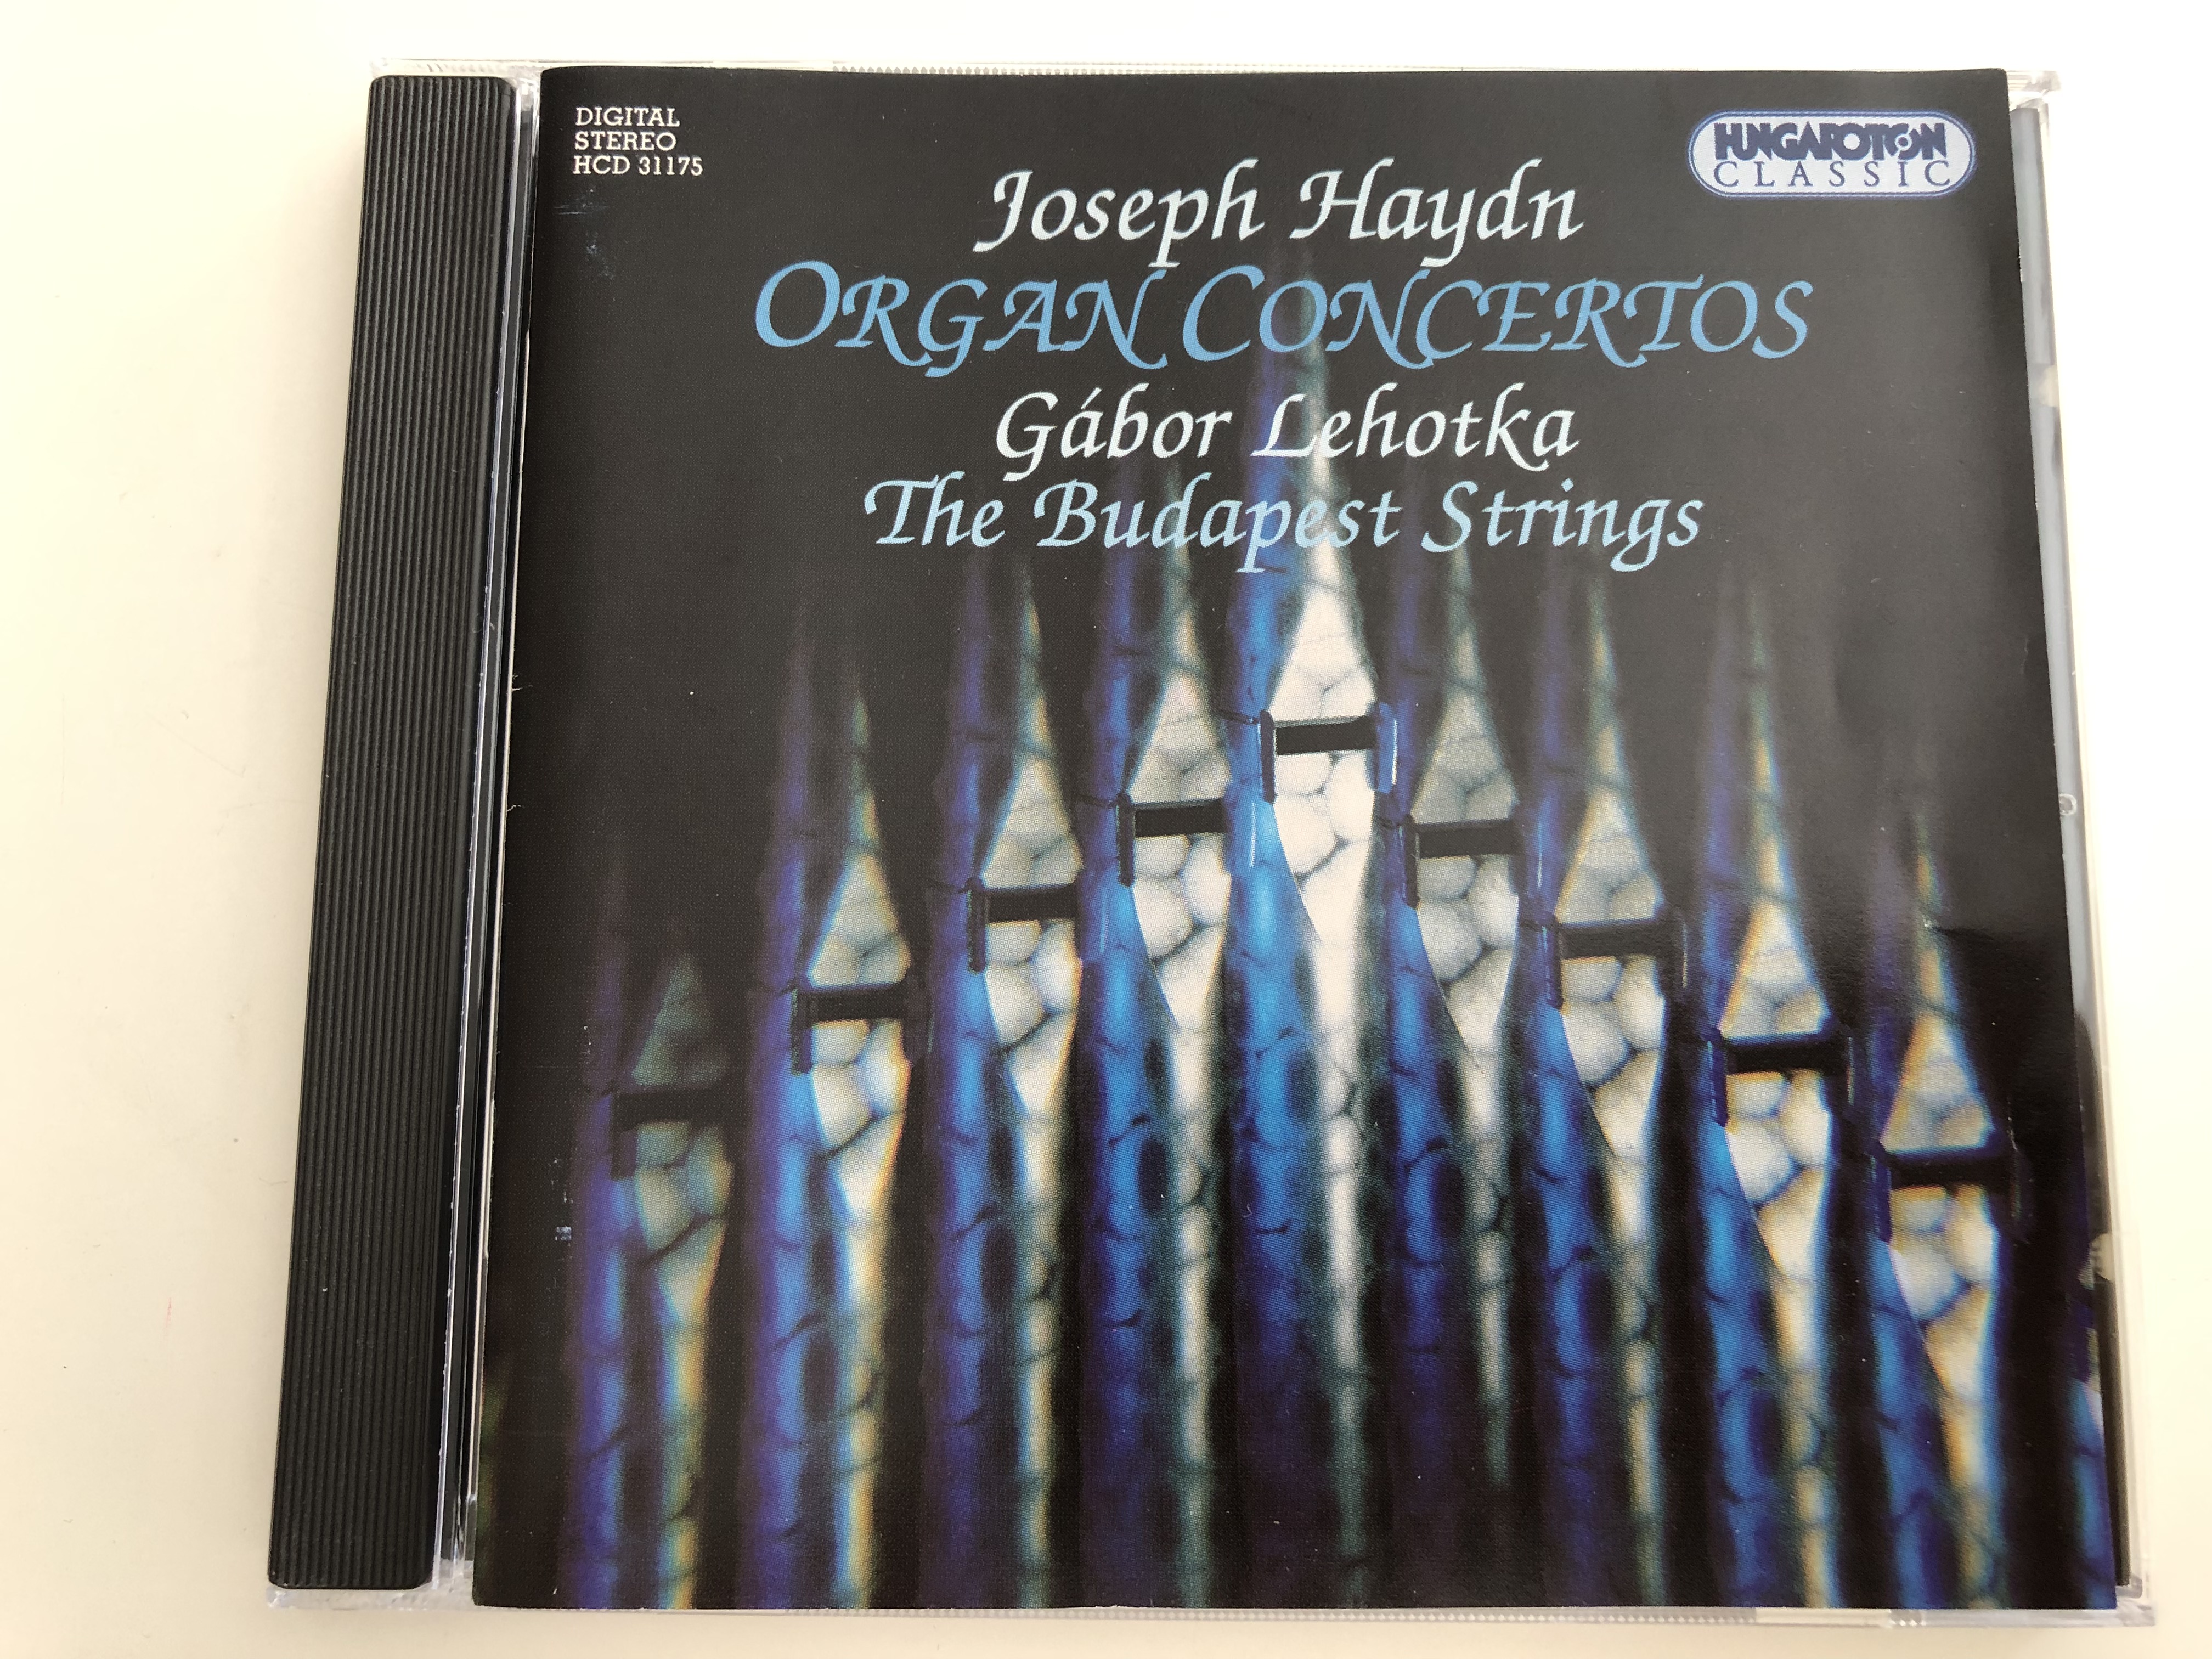 joseph-haydn-organ-concertos-g-bor-lehotka-the-budapest-strings-hungaroton-classic-audio-cd-1995-hcd-31175-1-.jpg